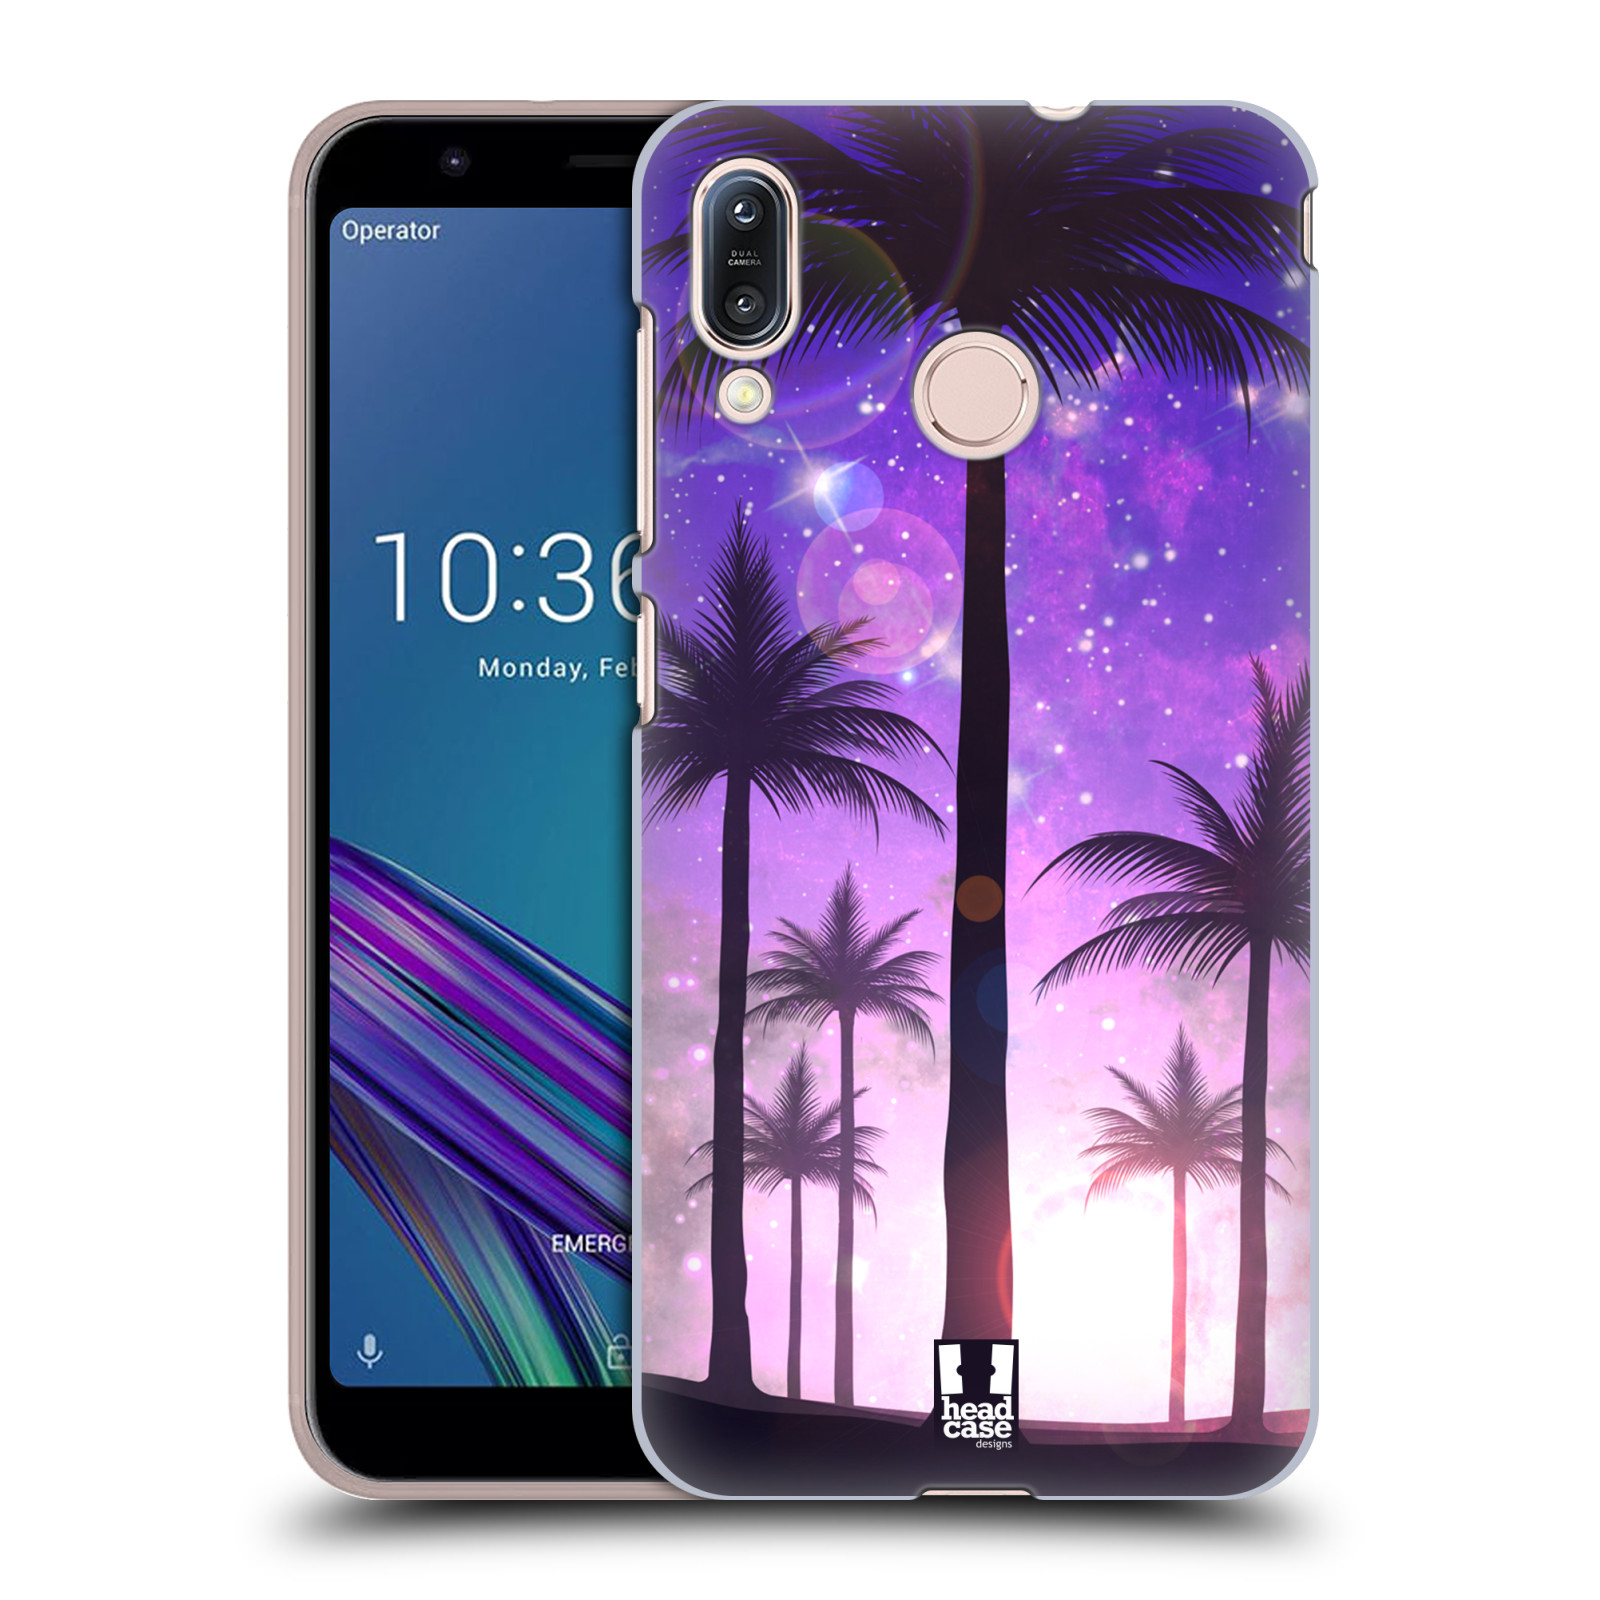 Pouzdro na mobil Asus Zenfone Max M1 (ZB555KL) - HEAD CASE - vzor Kreslený motiv silueta moře a palmy FIALOVÁ